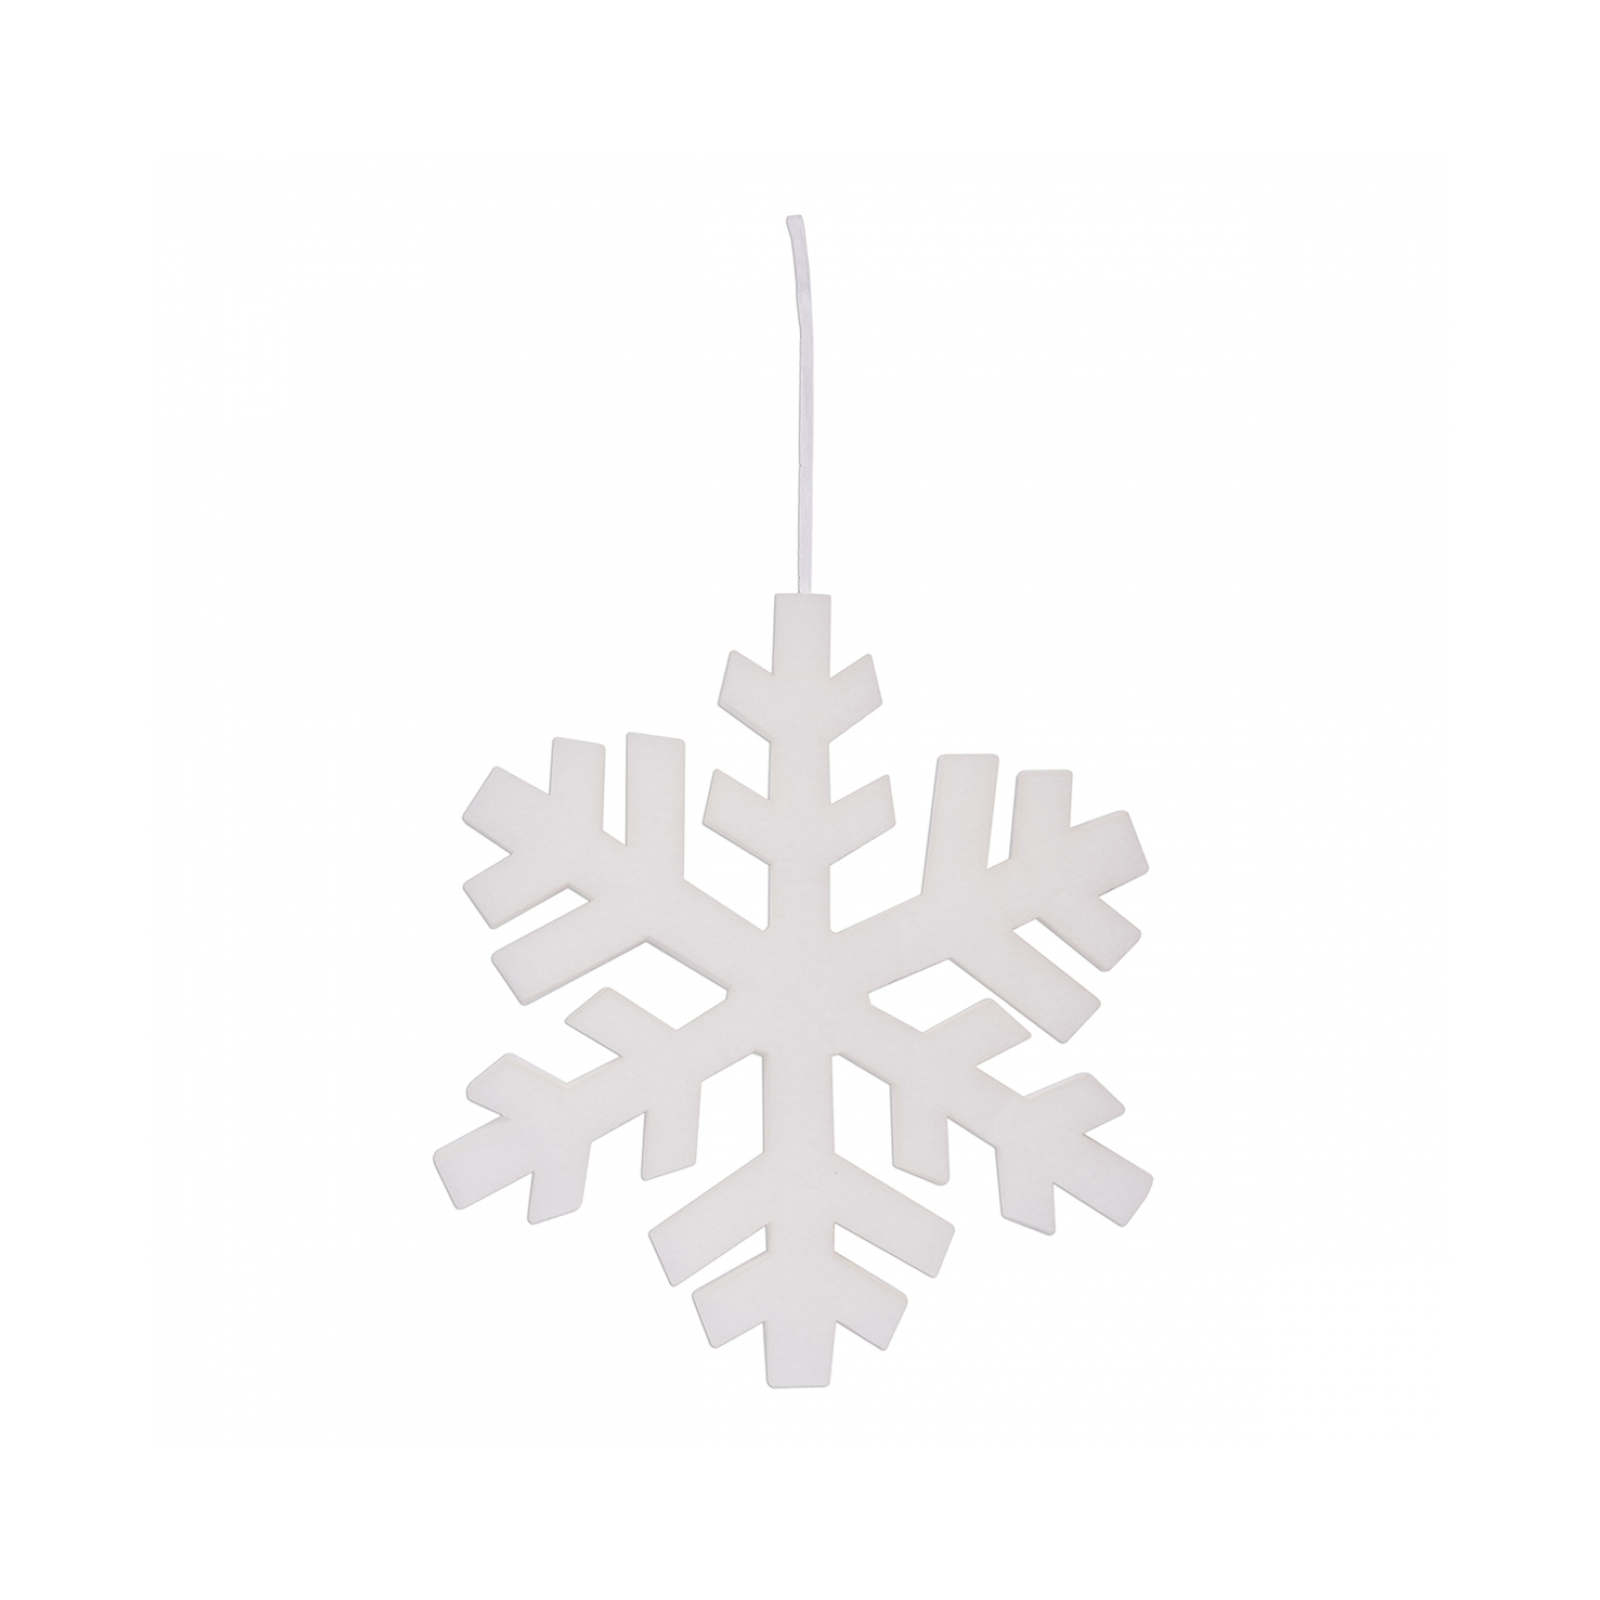 Украшение декоративное Novogod`ko сніжинка біла, поліестер, 40 cм (974202)